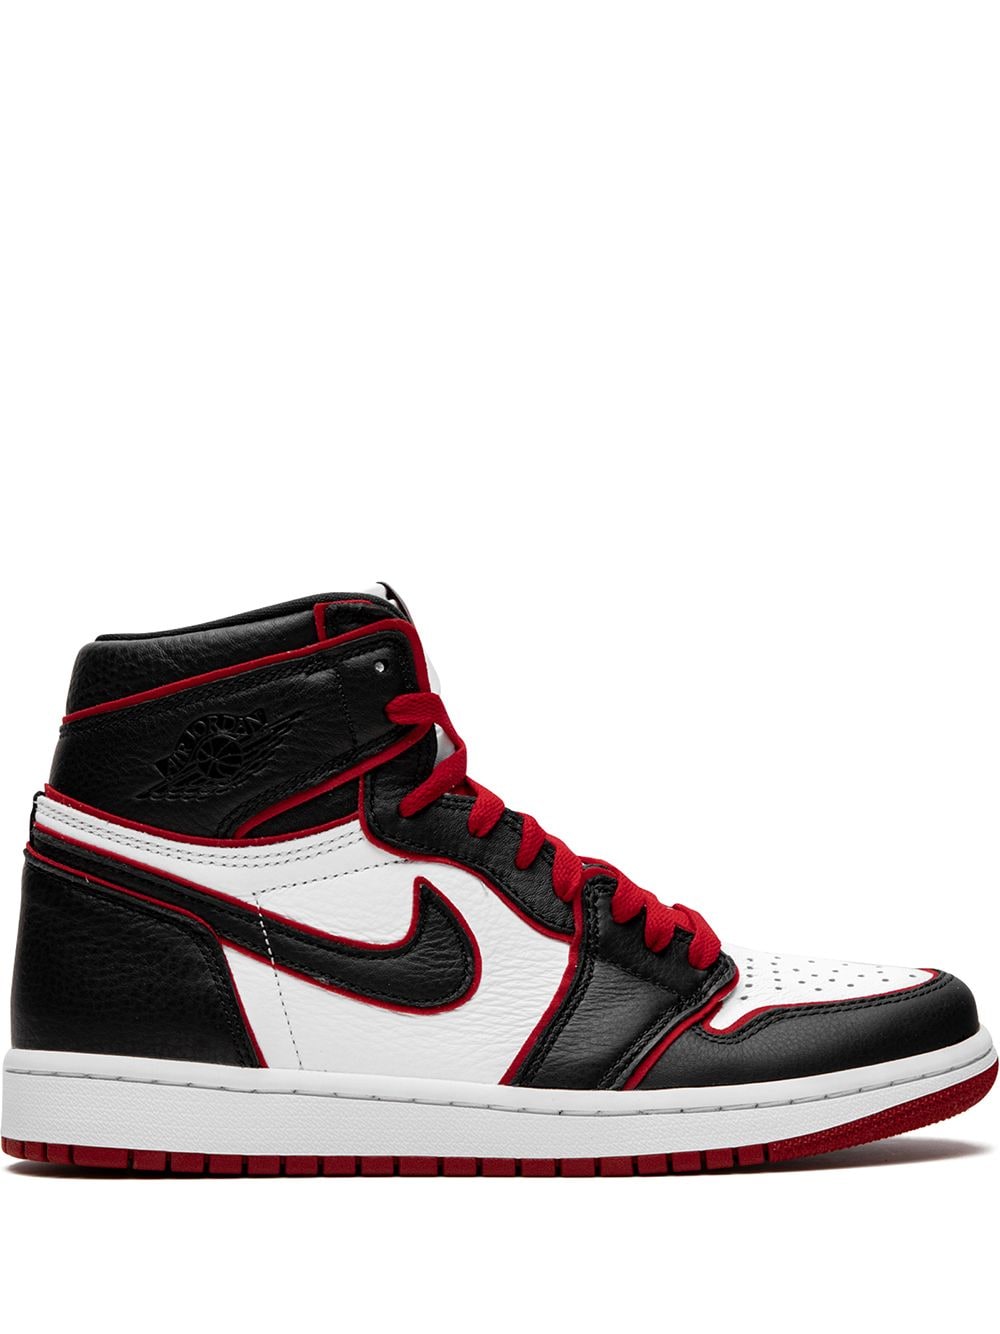 Jordan Air Jordan 1 High OG "Bloodline/Meant To Fly" sneakers - Black